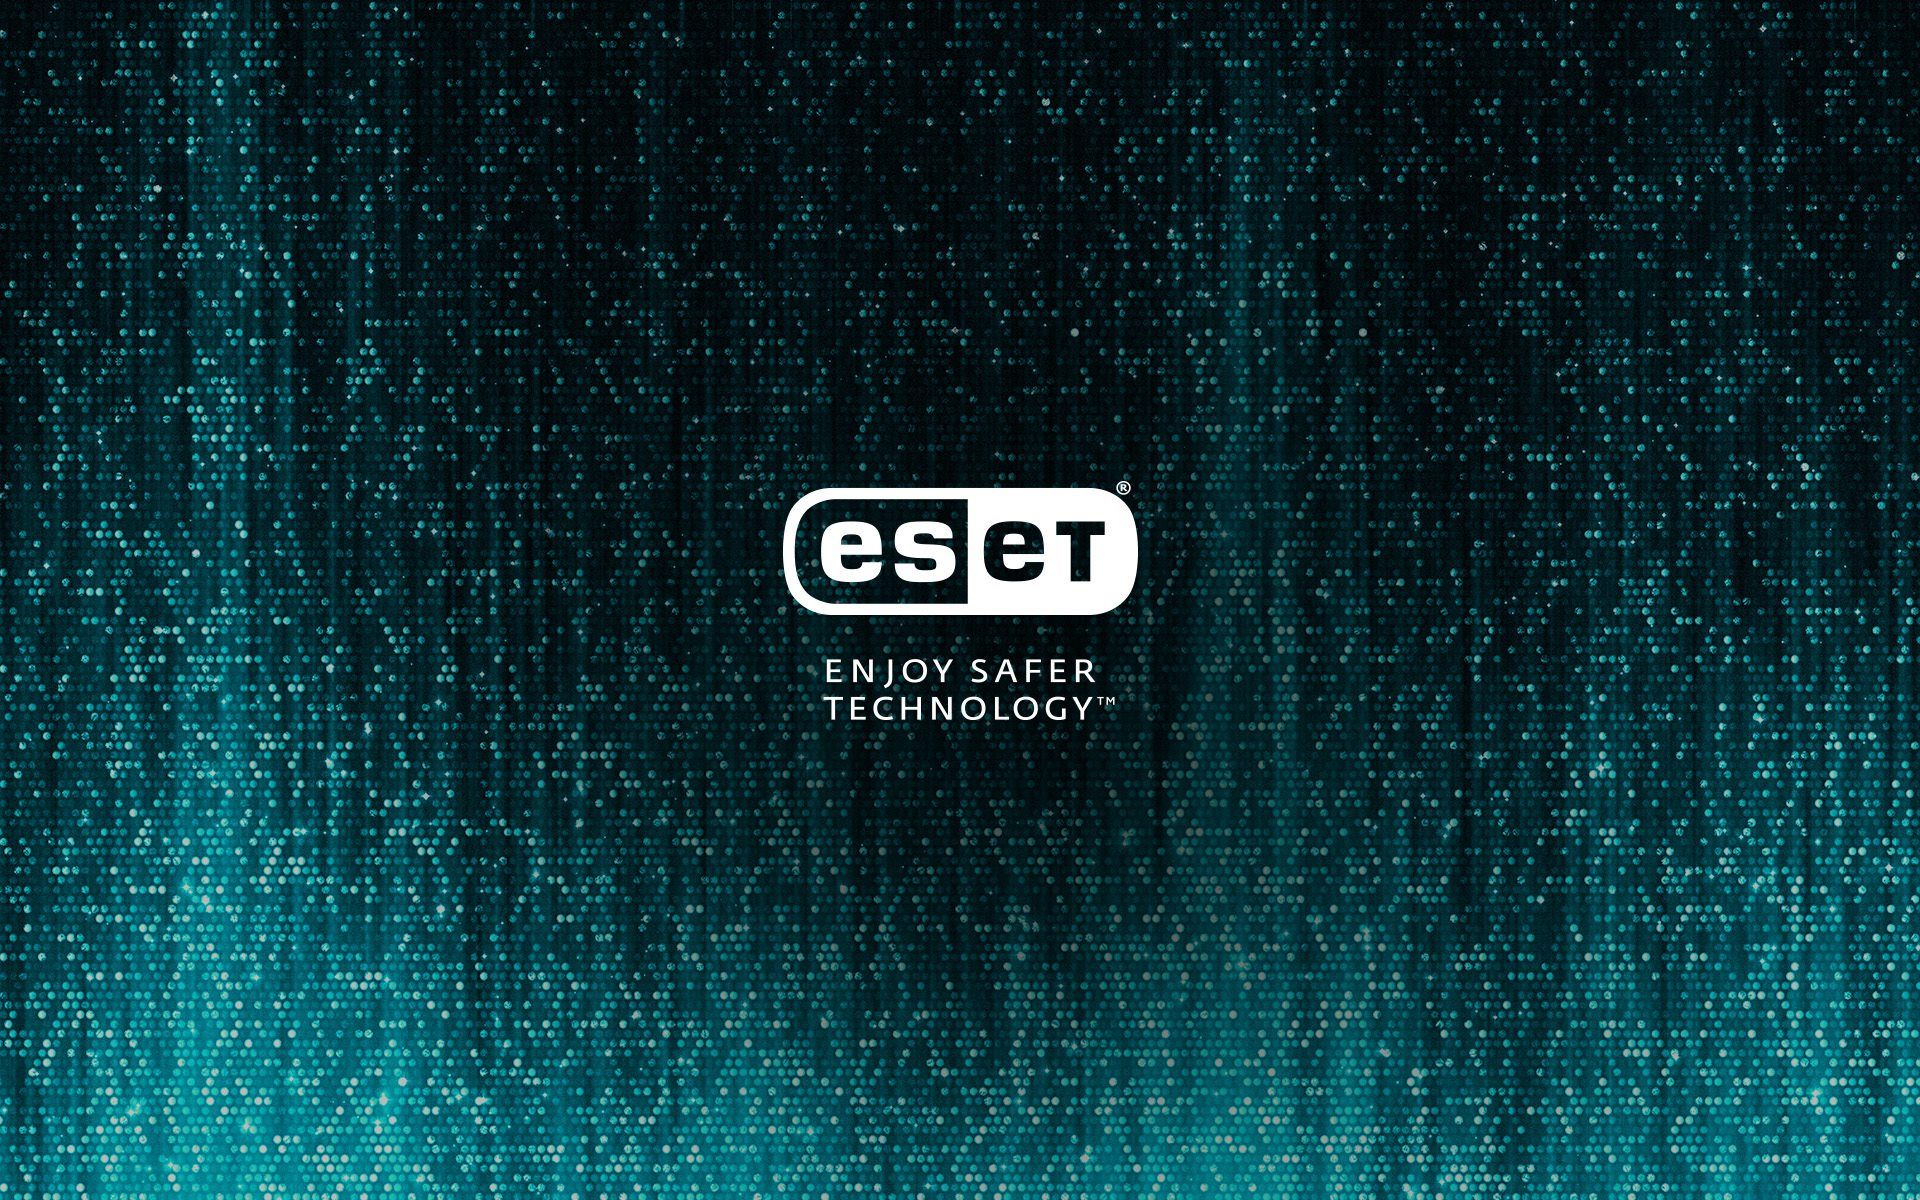 eset security it partner